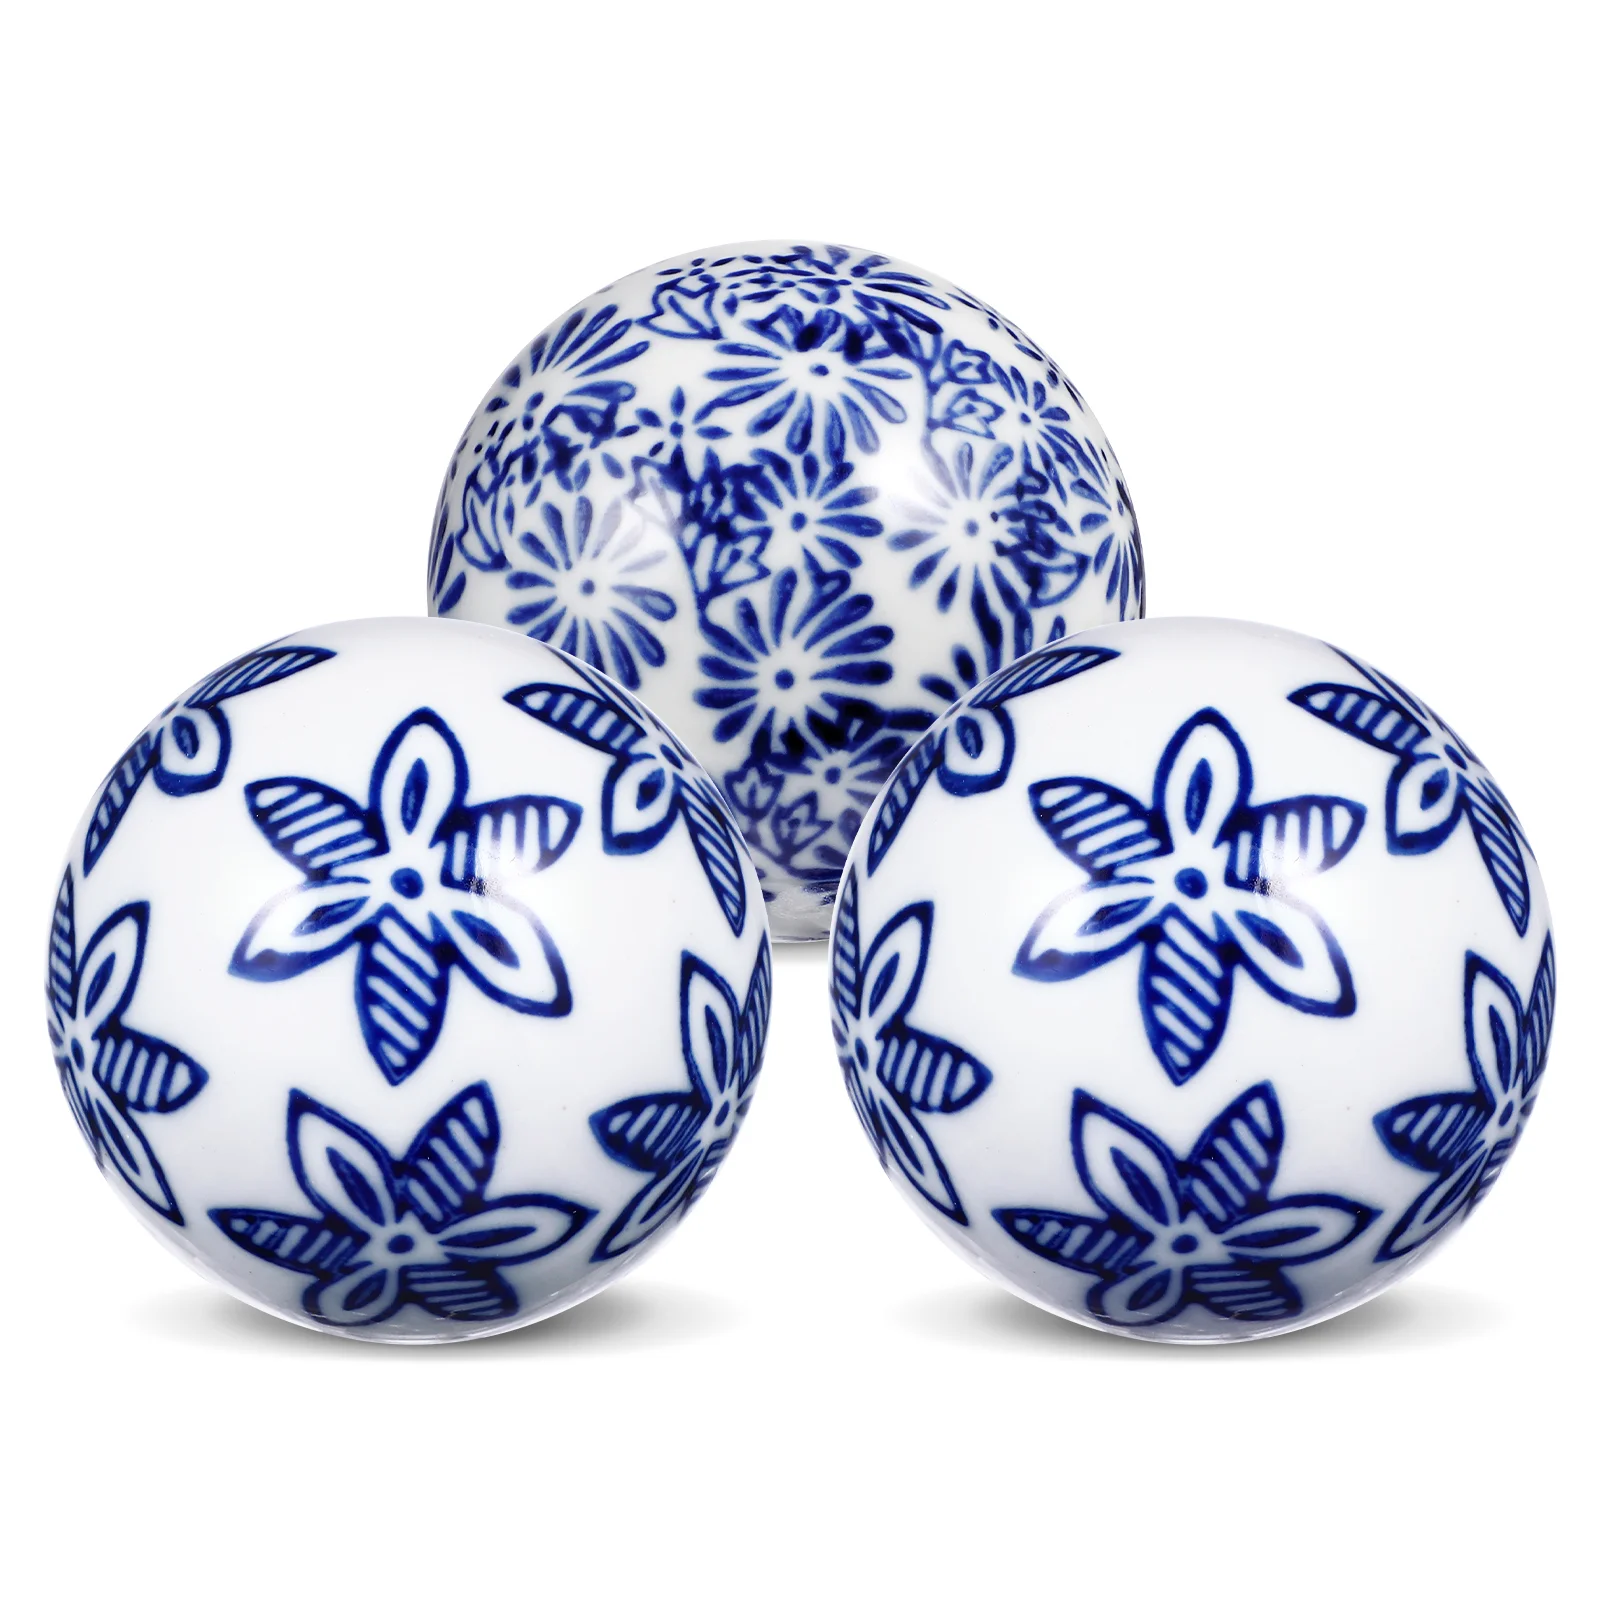 

Ceramic Decorative Ball Blue White Porcelain Floating Orbs Spheres Centerpiece Set Home Decor